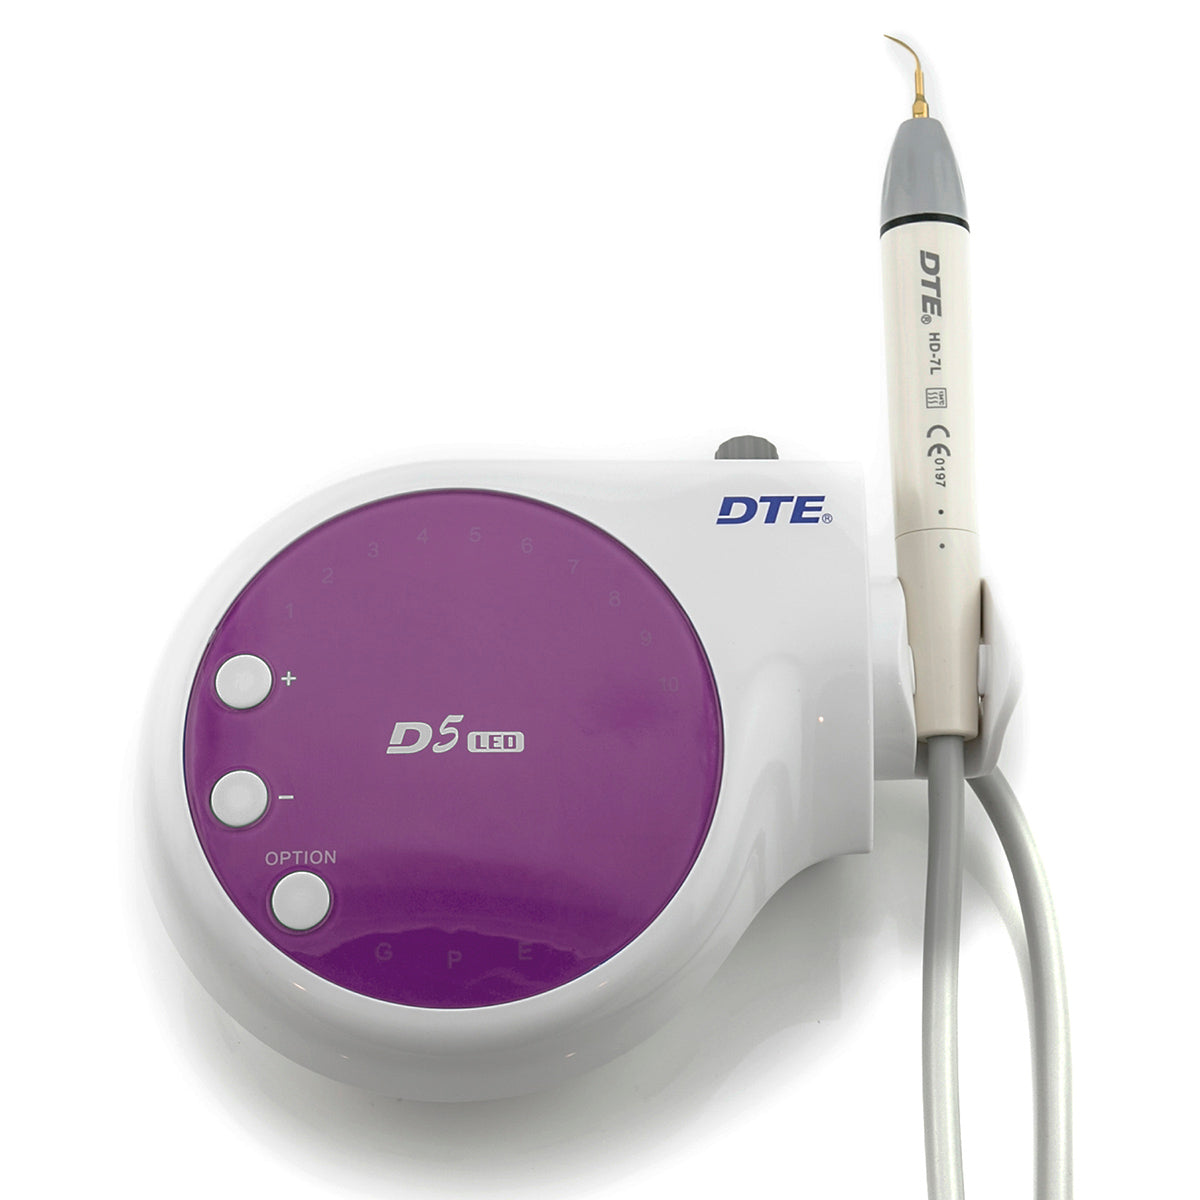 Woodpecker DTE D5 LED Ultrasonic Scaler 6 Tips Purple- pairaydental.com